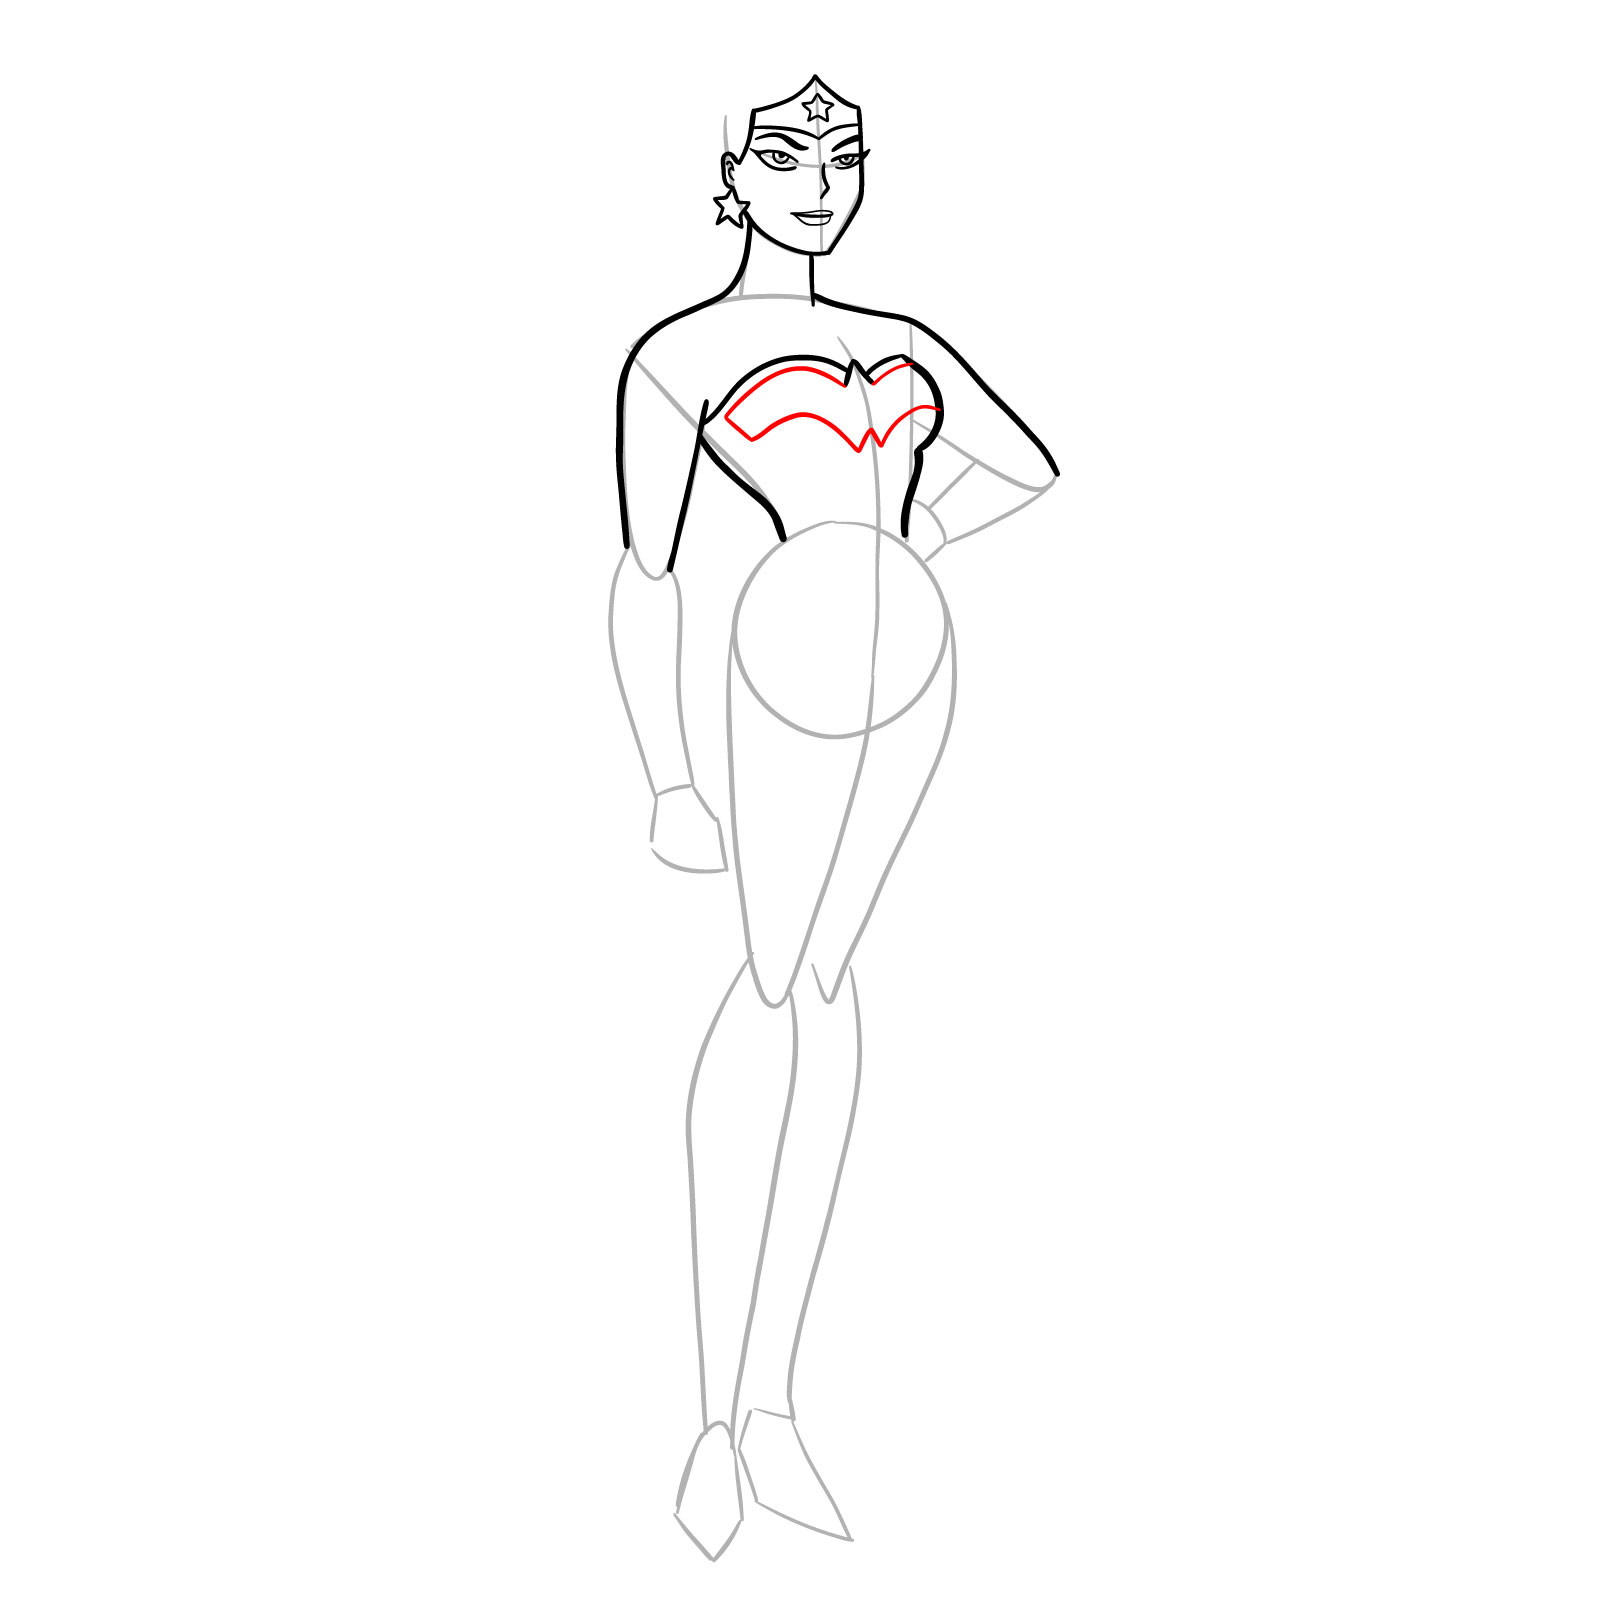 How to draw Wonder Woman cartoon style - step 14